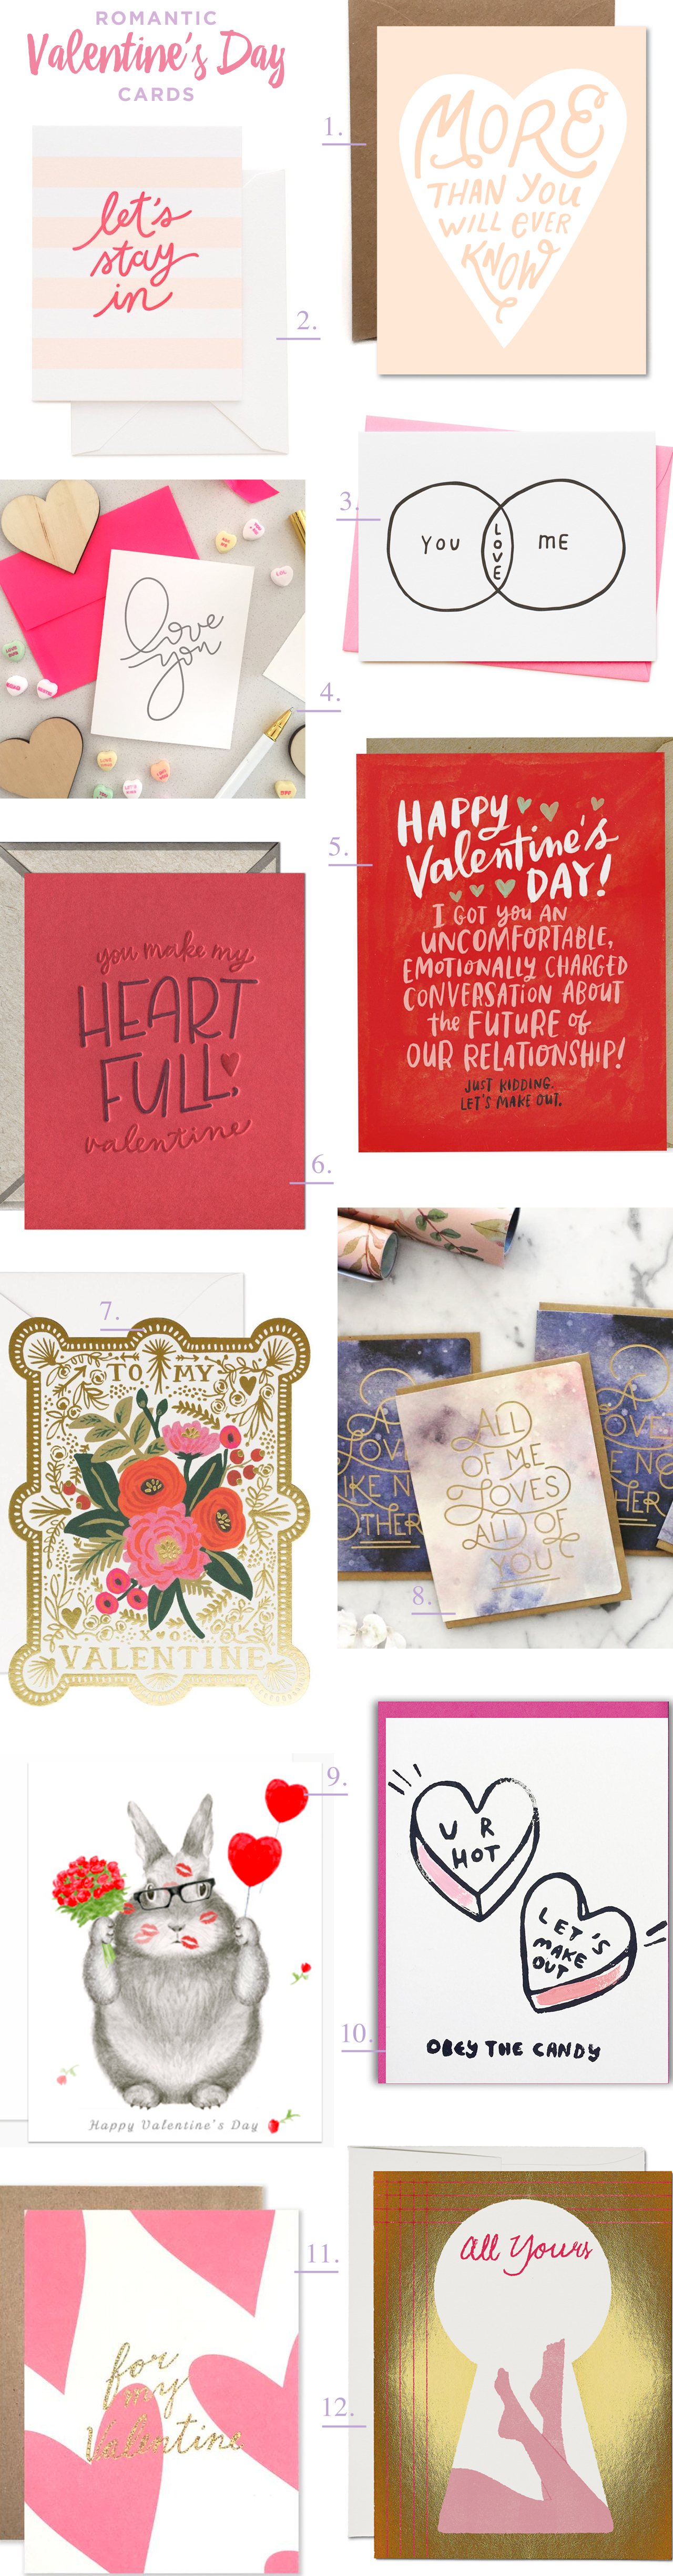 Seasonal Stationery: Romantic Valentine's Day Cards1280 x 4900